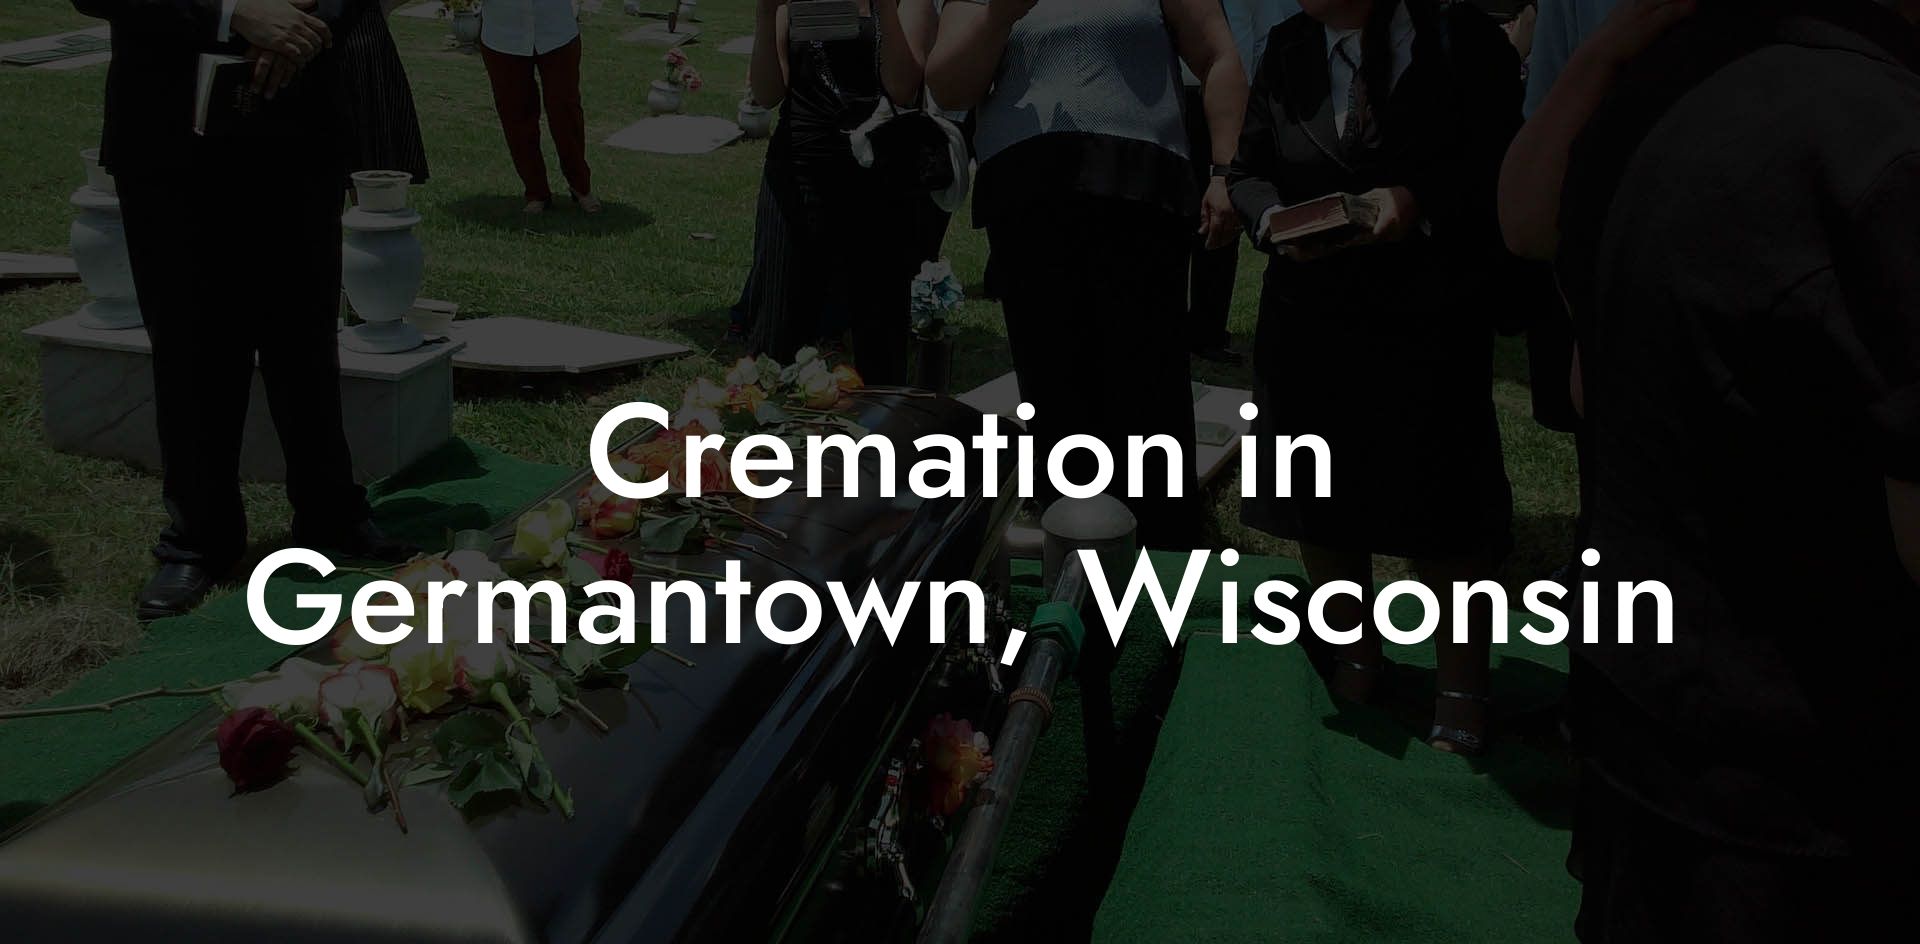 Cremation in Germantown, Wisconsin